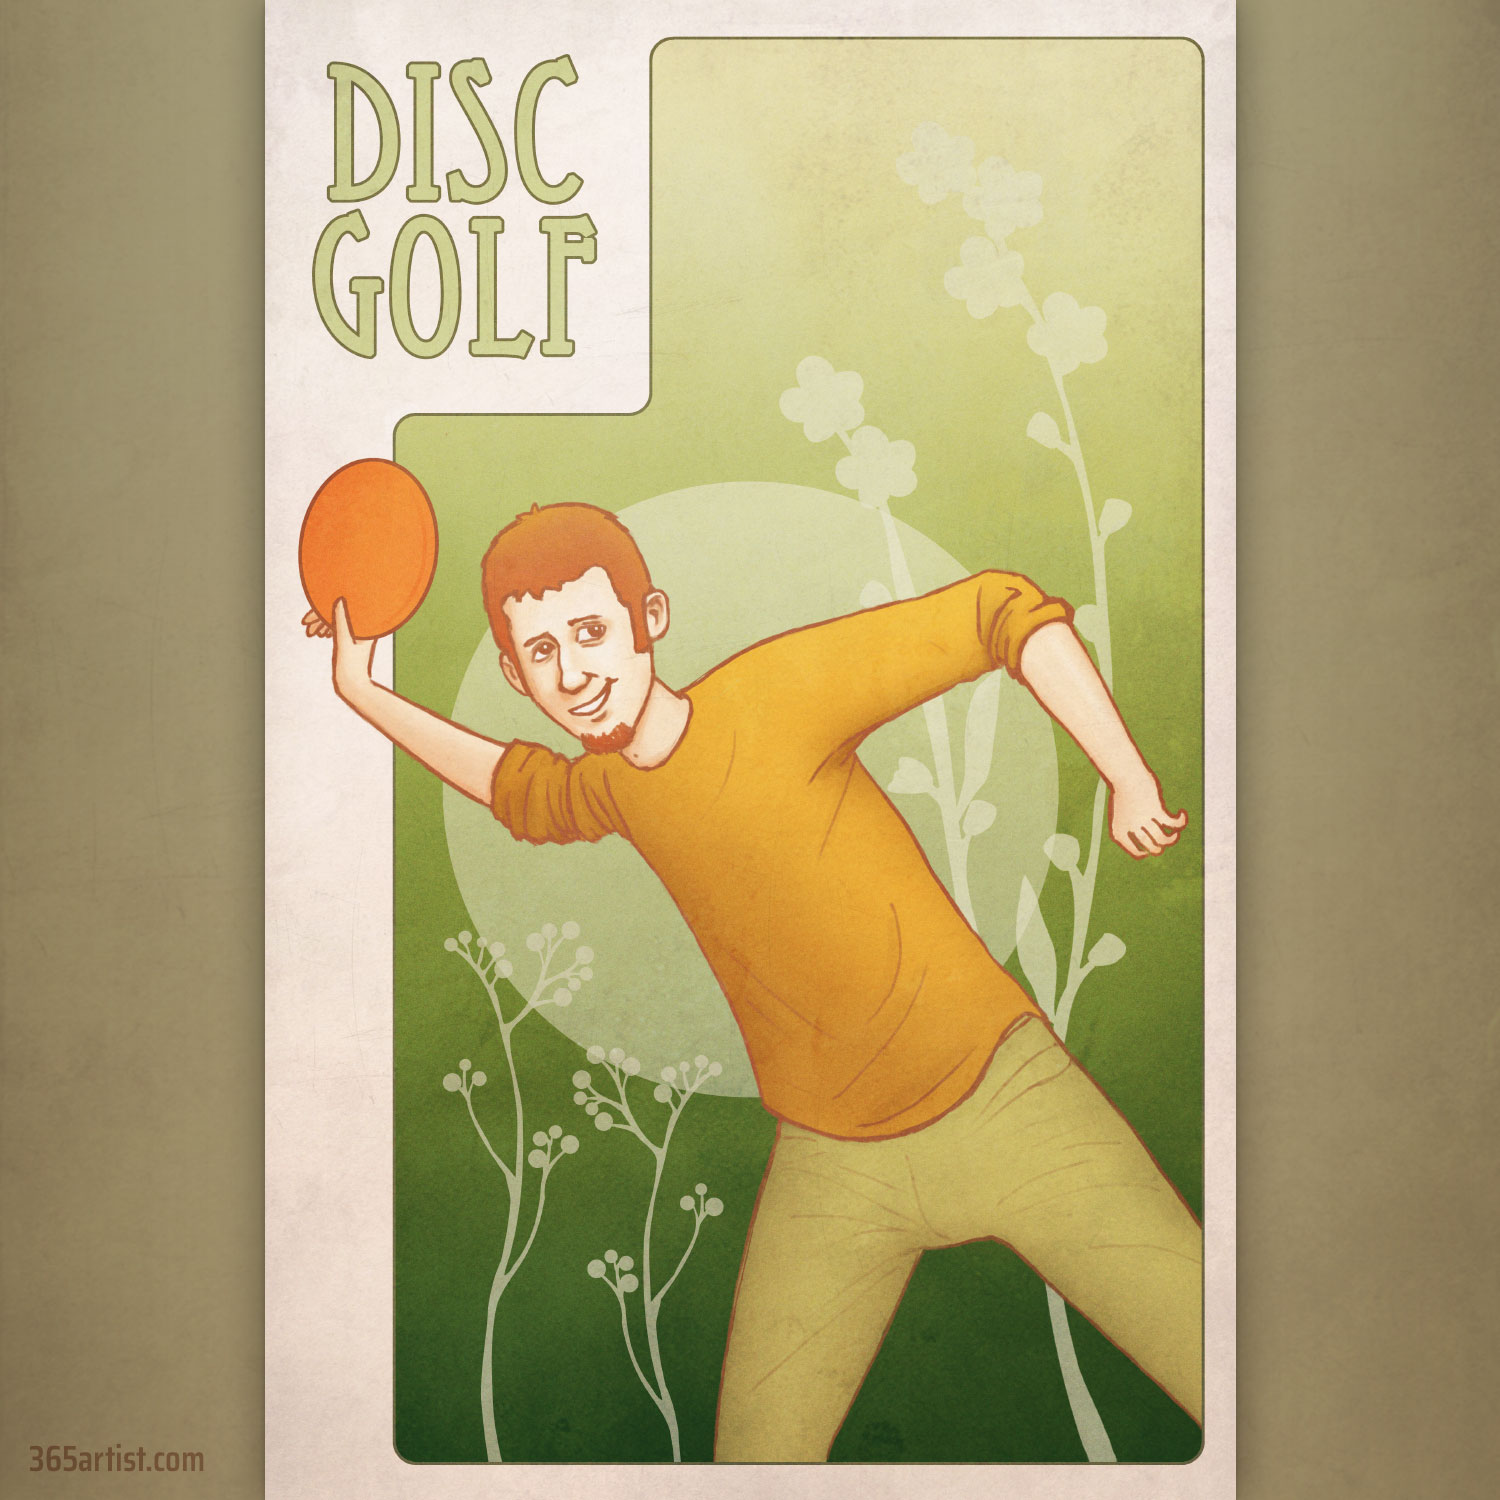 disc golf illustration